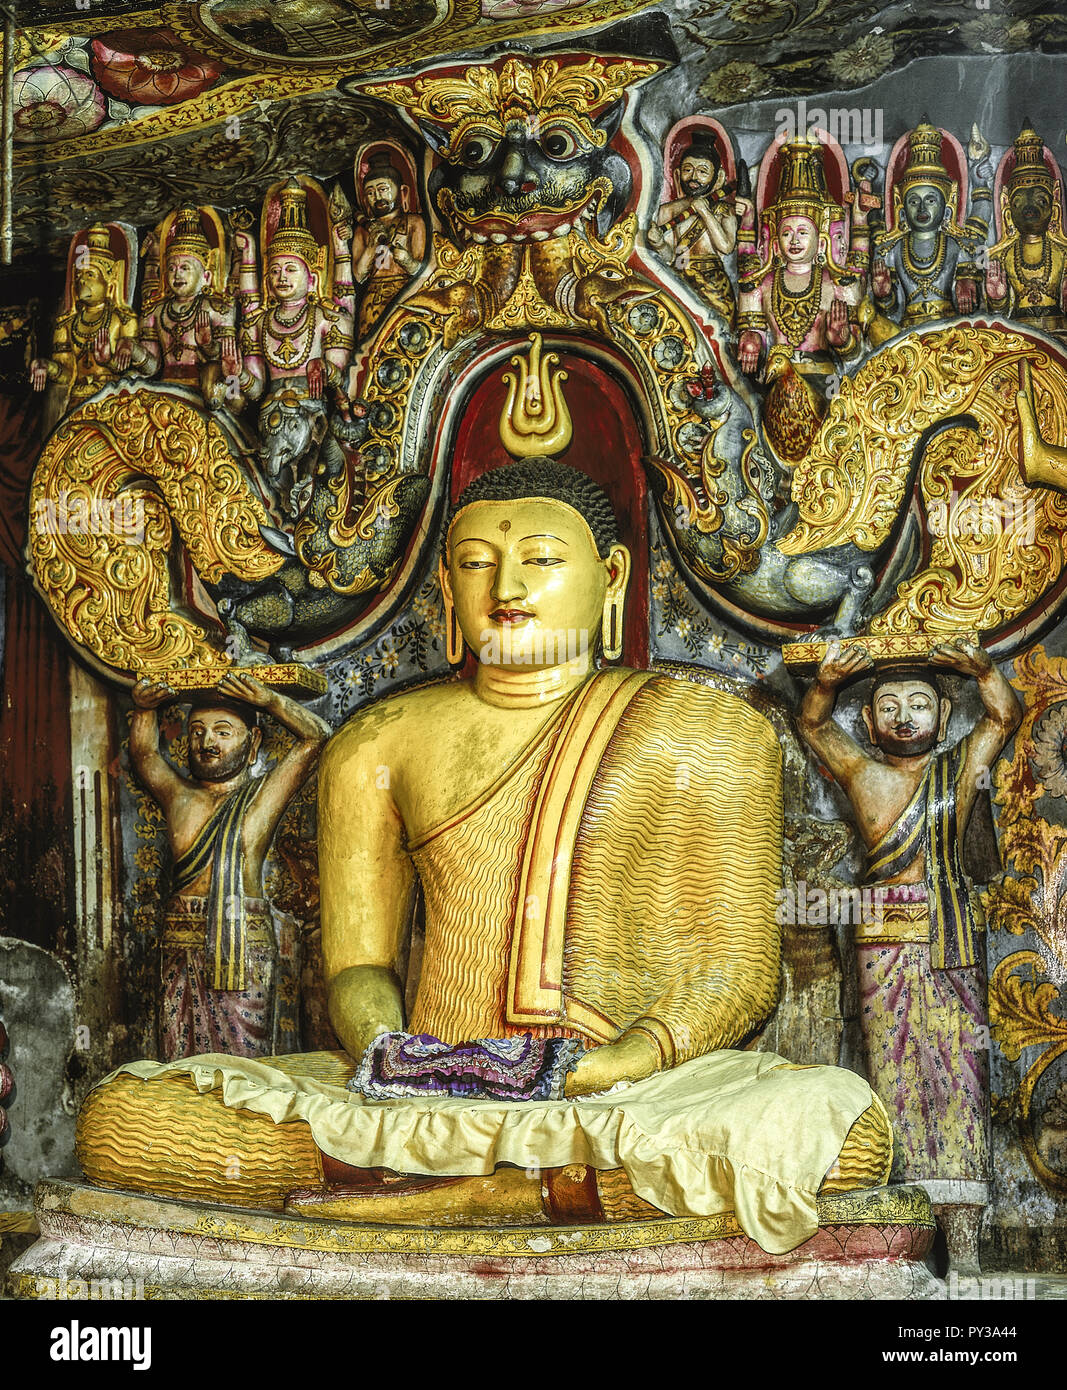 Sitzende Buddhafigur, Felsentempel, Aluvihara, Sri Lanka Foto de stock